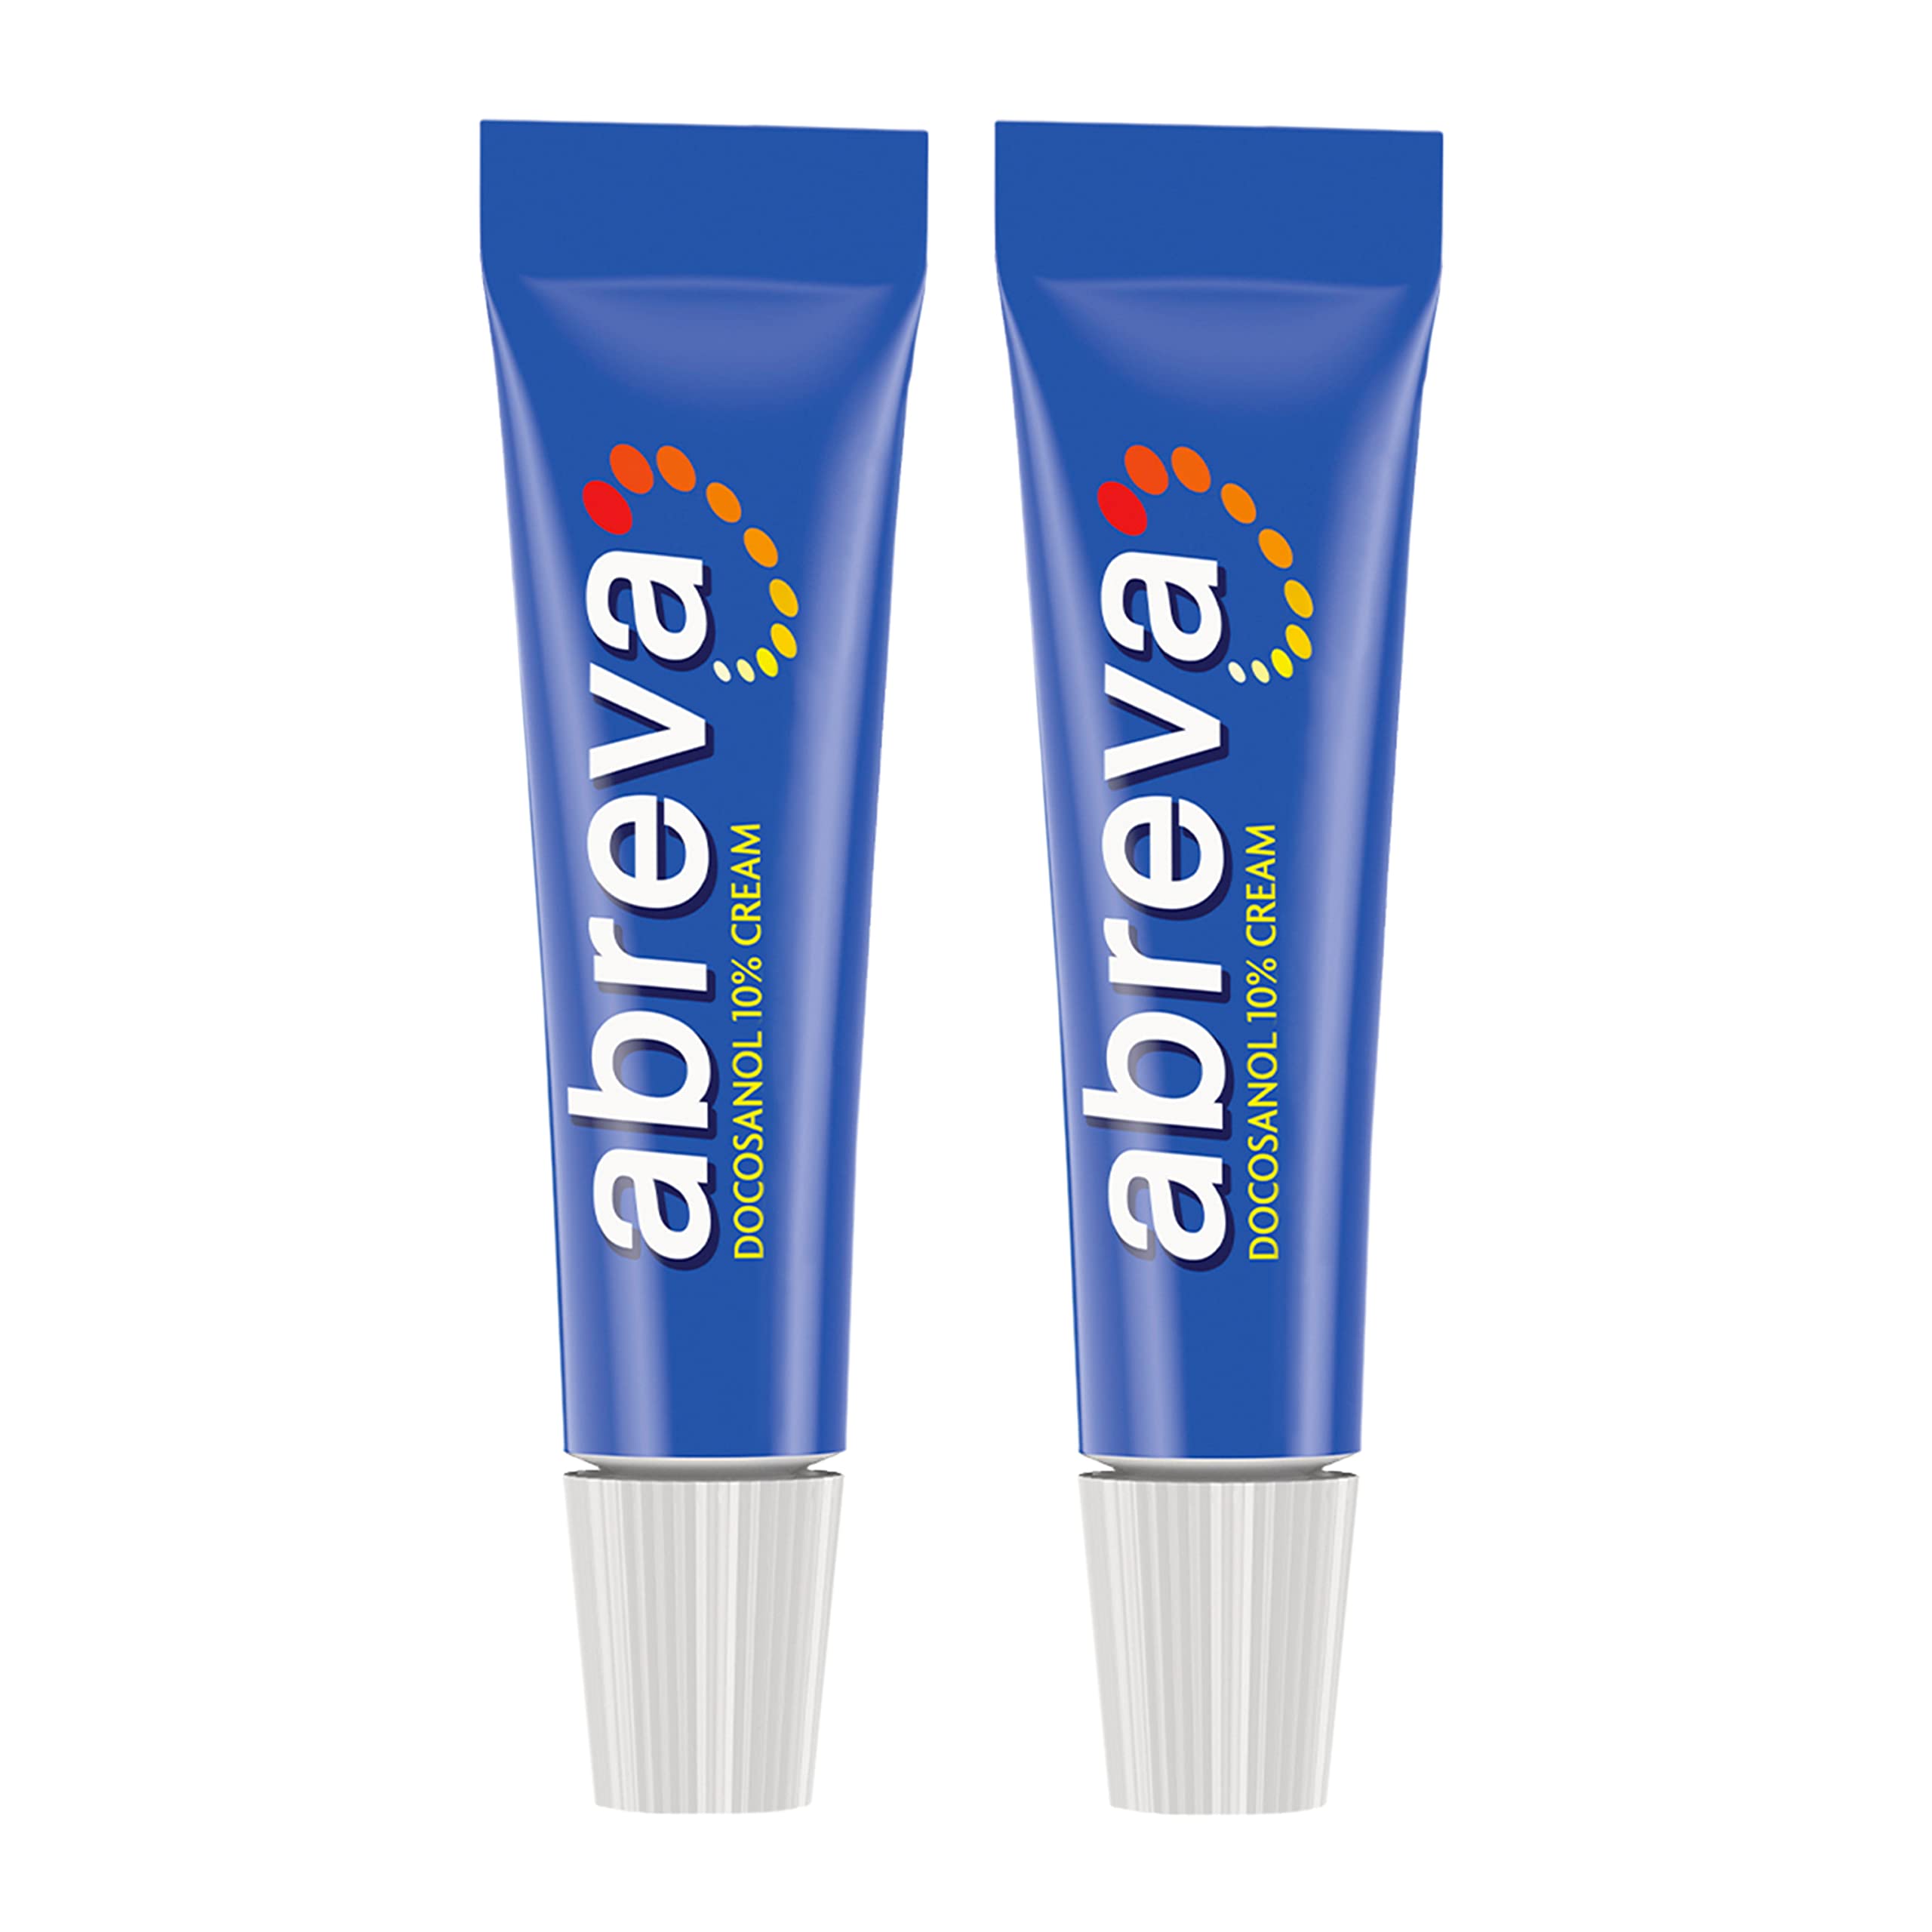 2 tubes Abreva 10% Docosanol Cold Sore Treatment - $16.33 @Amazon